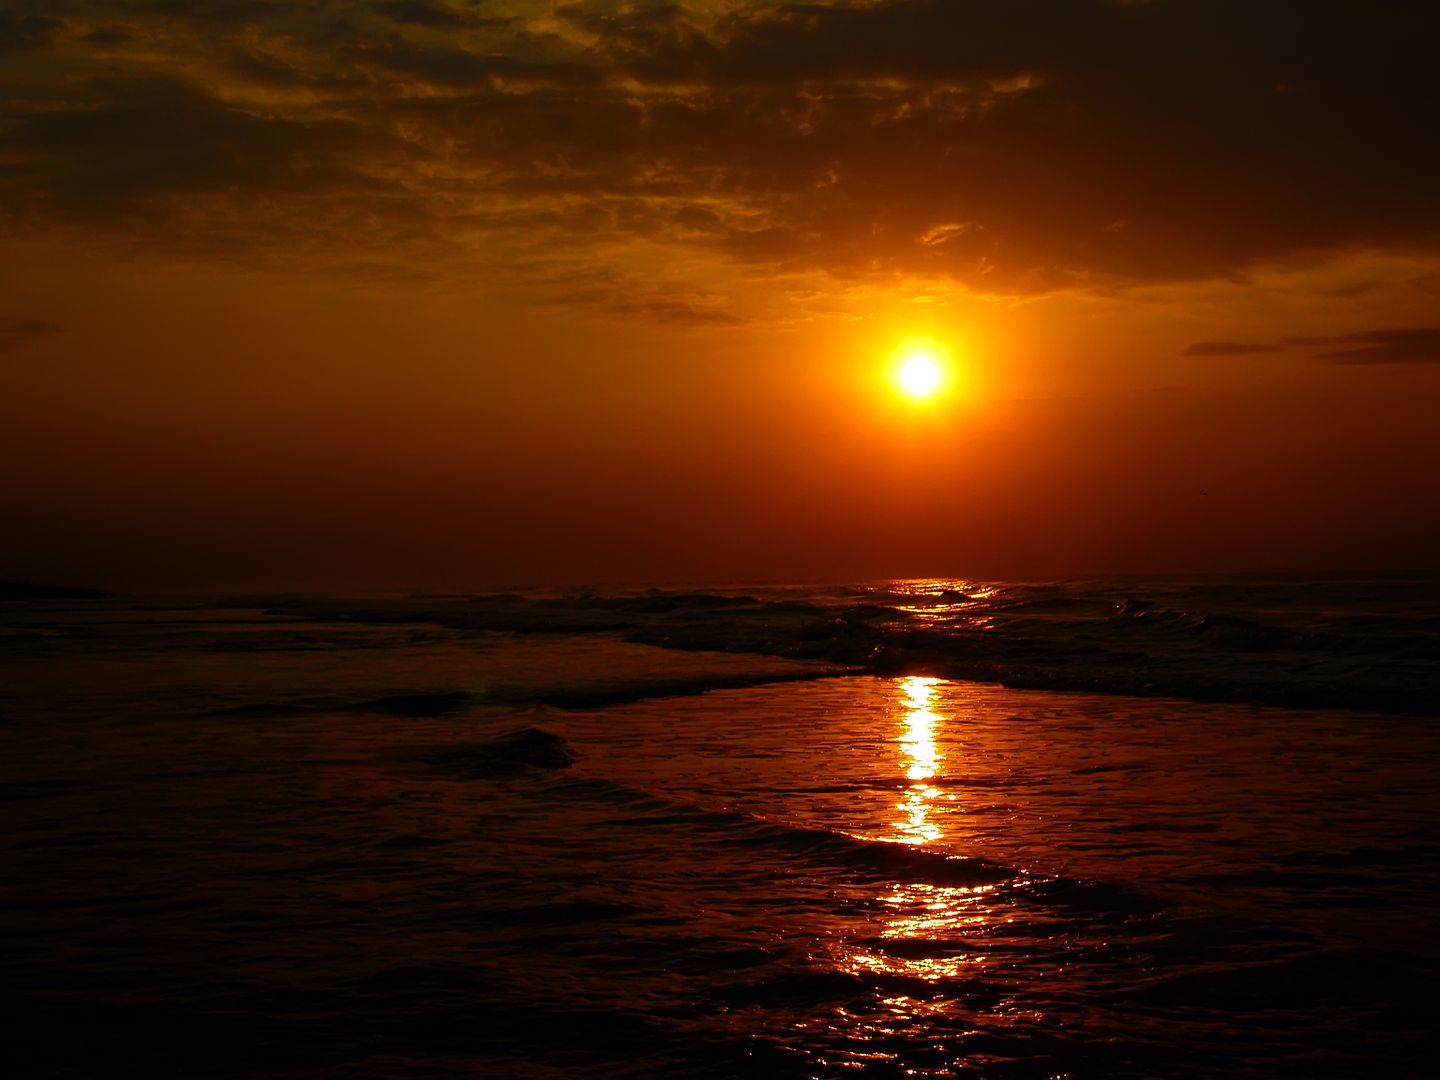 sunrise-at-puri-beach-new_zpsc2859fb7.jpg